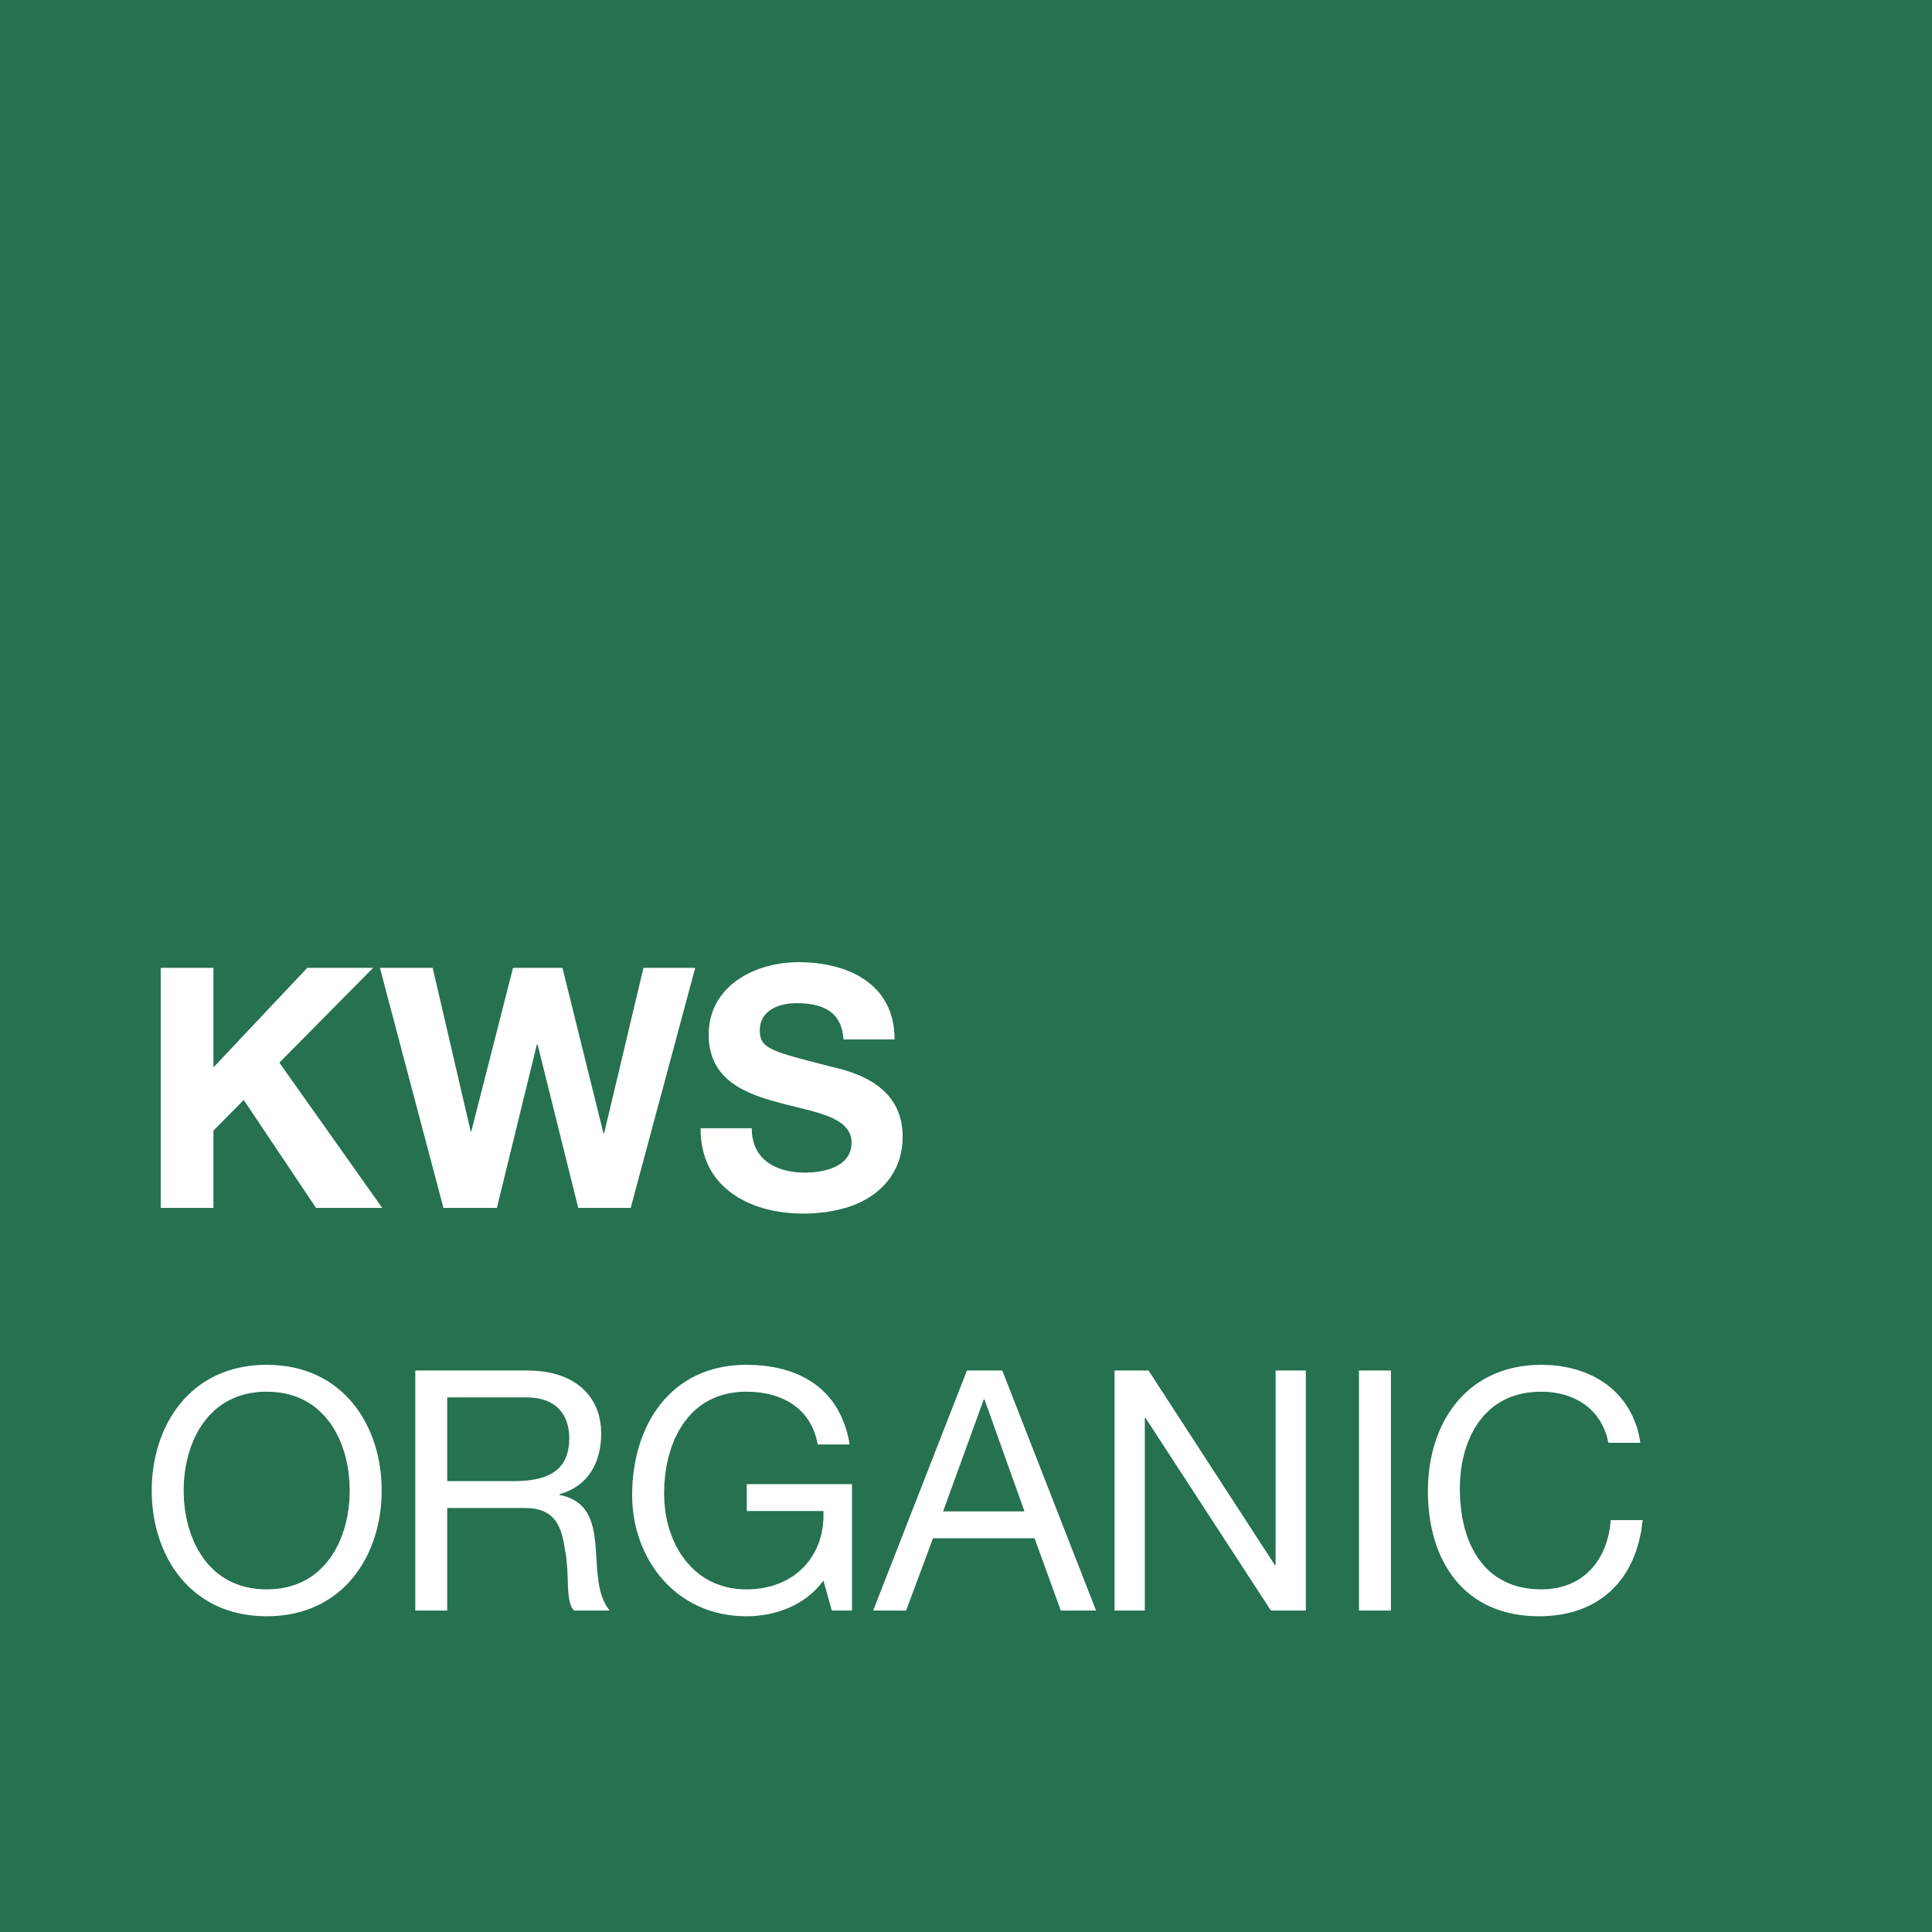 KWS Organic